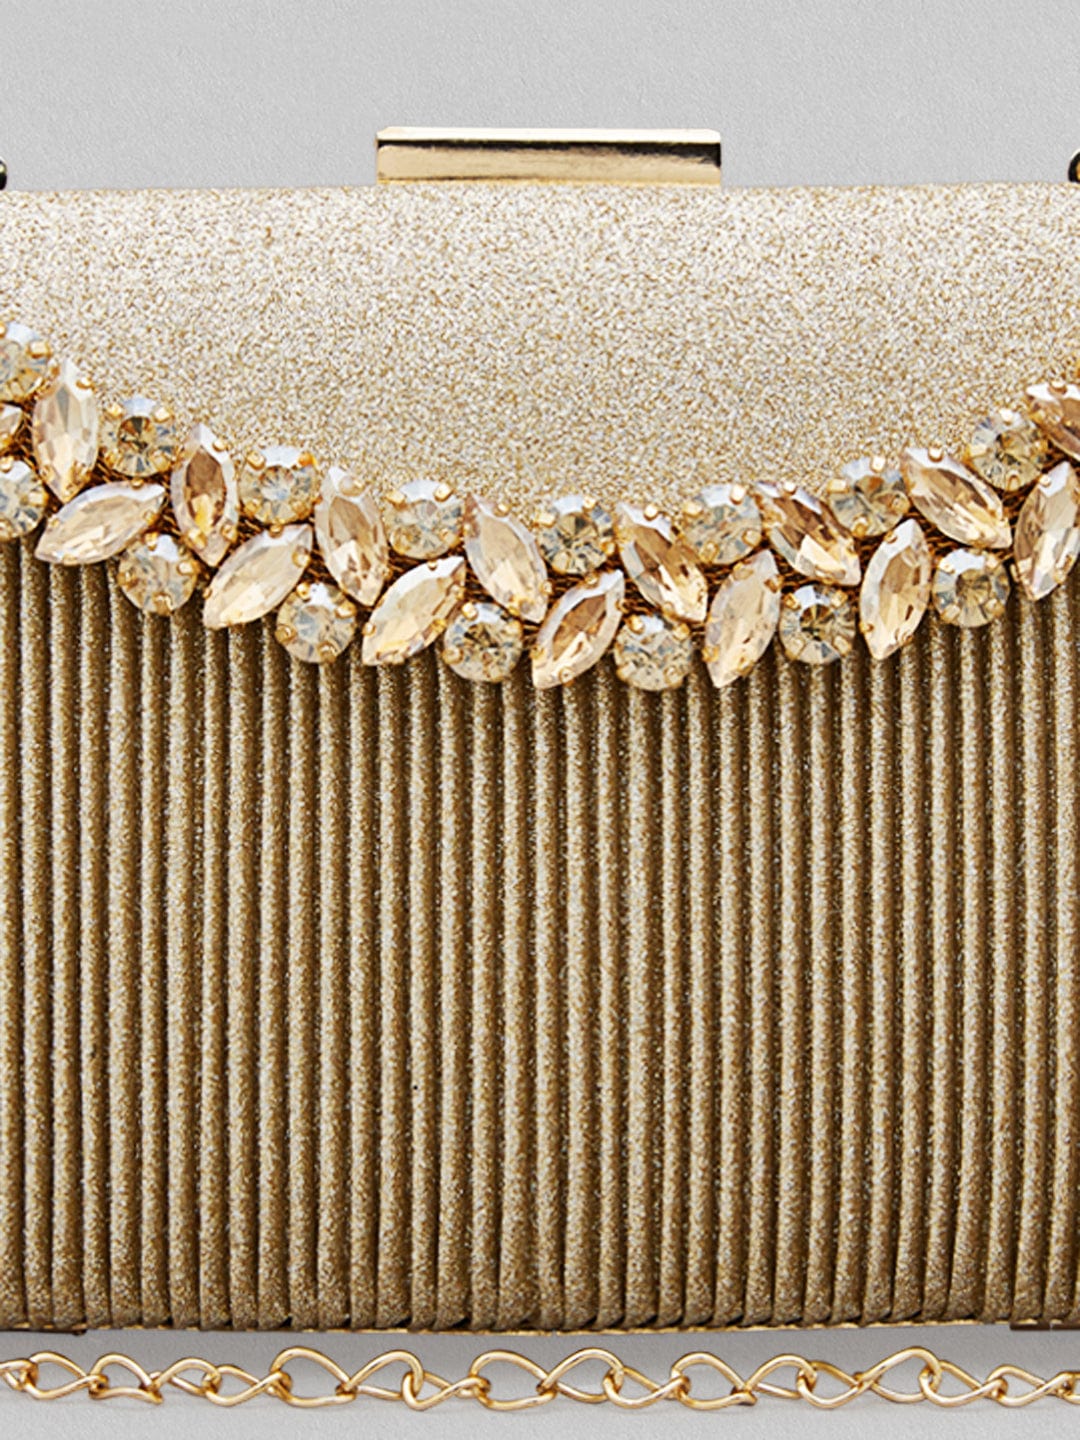 Rubans Golden Coloured Box Clutch With Studded American Diamonds Handbag & Wallet Accessories